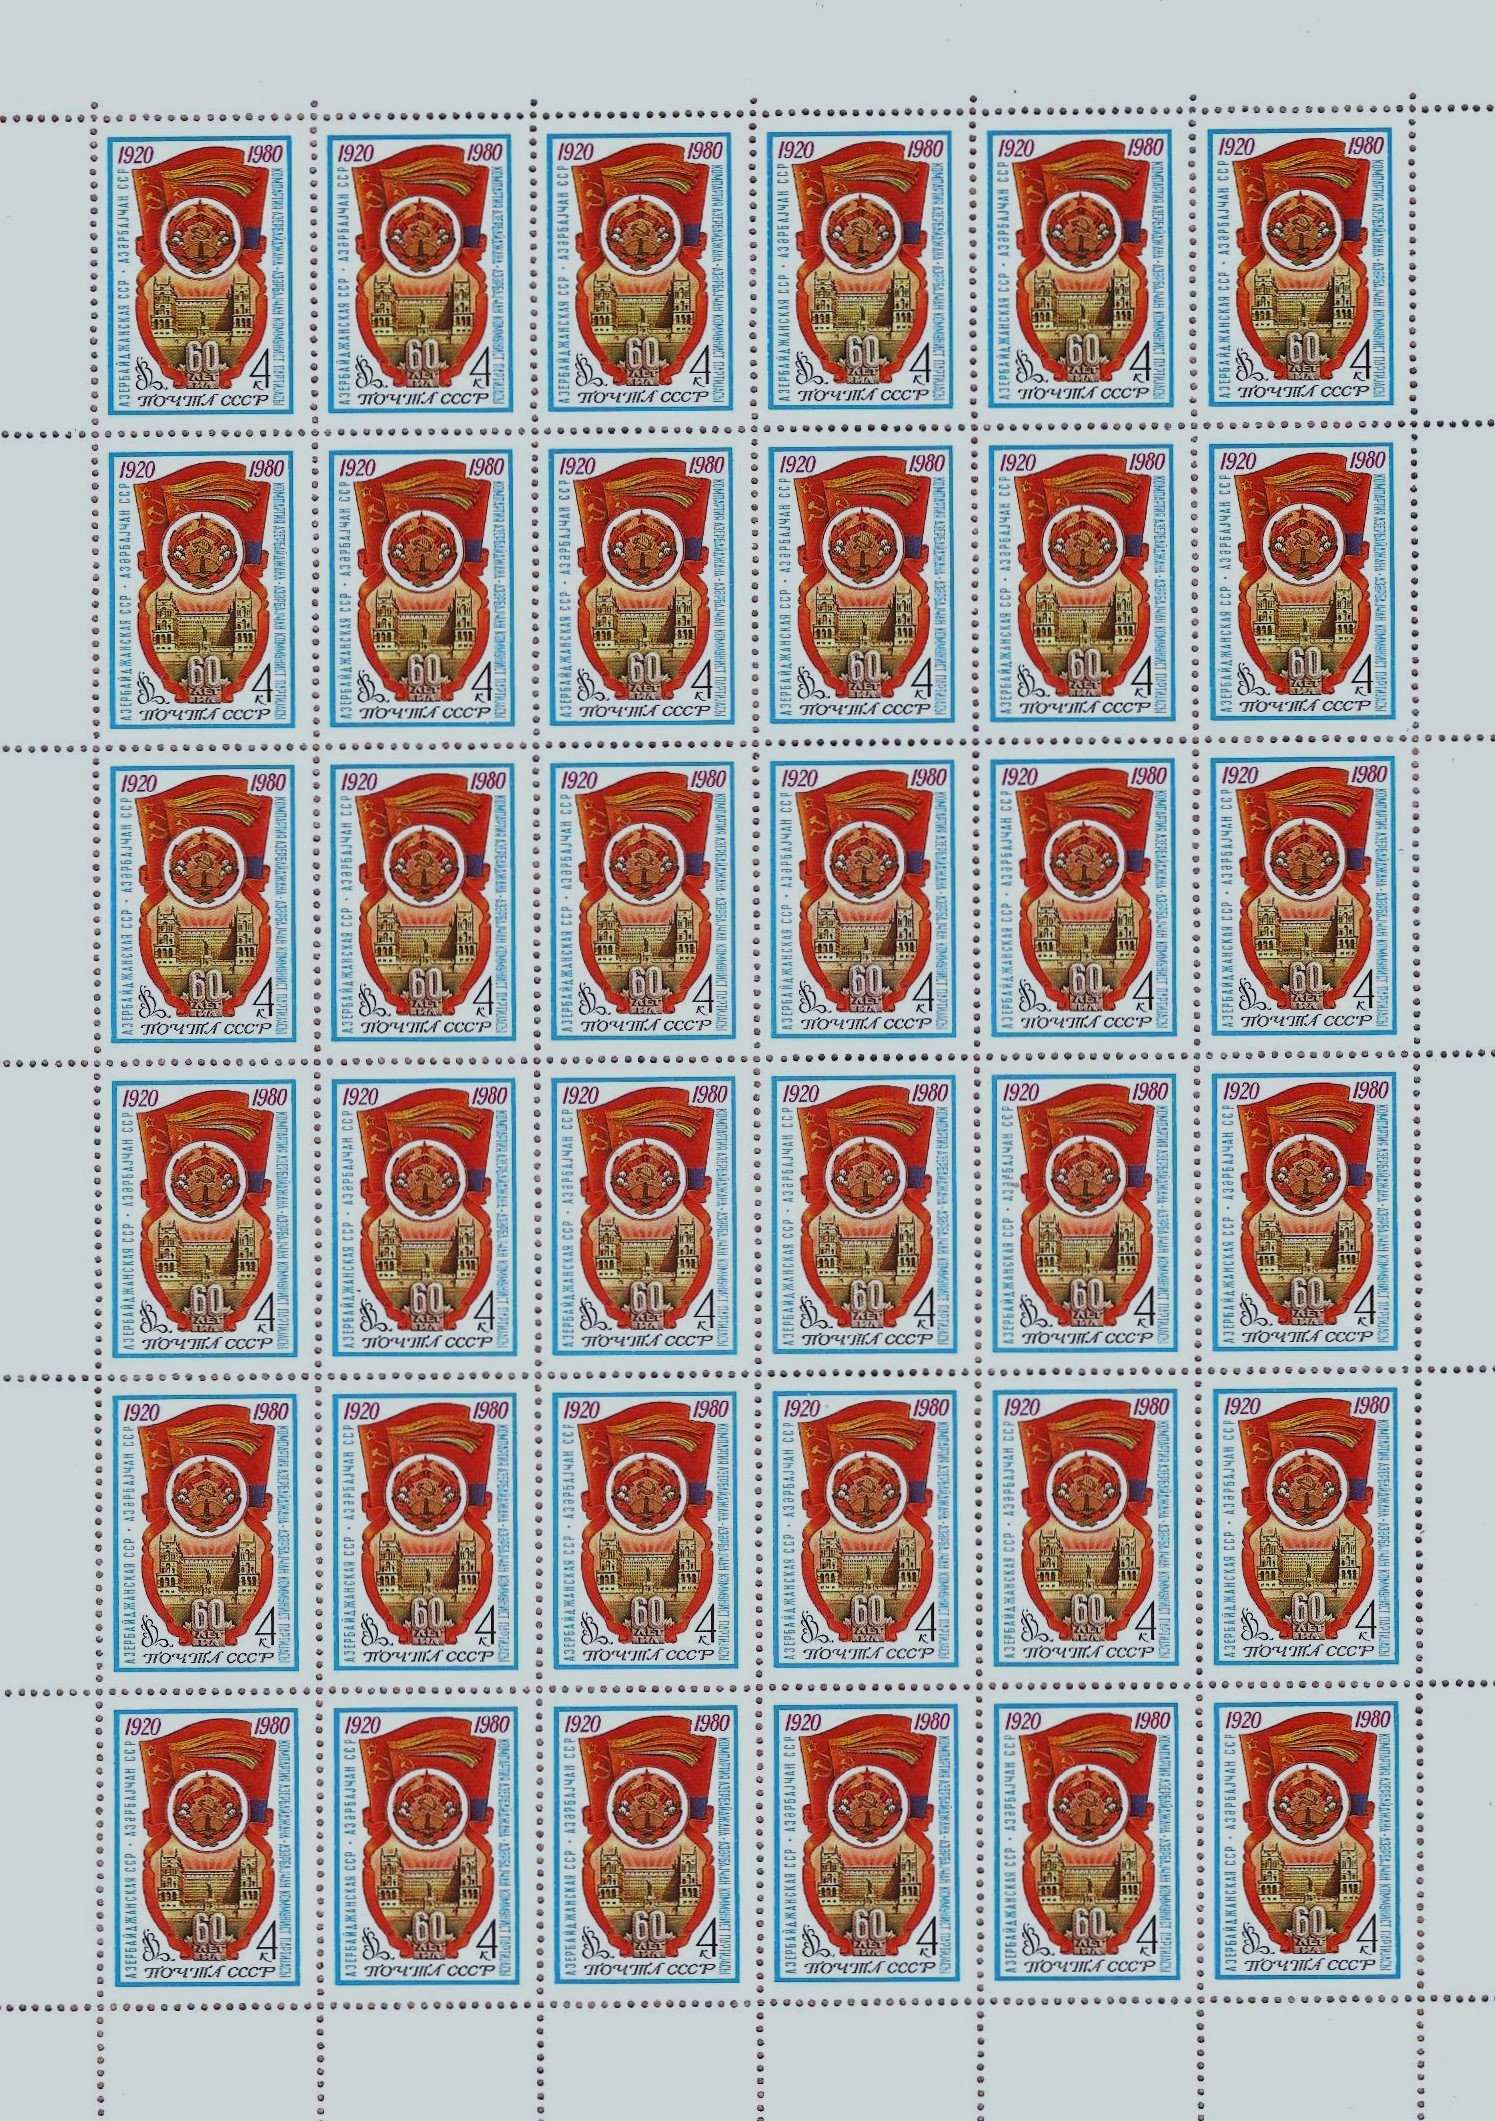 1980, 5072, 60-е Азербайджанской ССР, офсет USSR, 1980, SC# 4821,Azerbaijan SSR, FUII SHEET, MNH